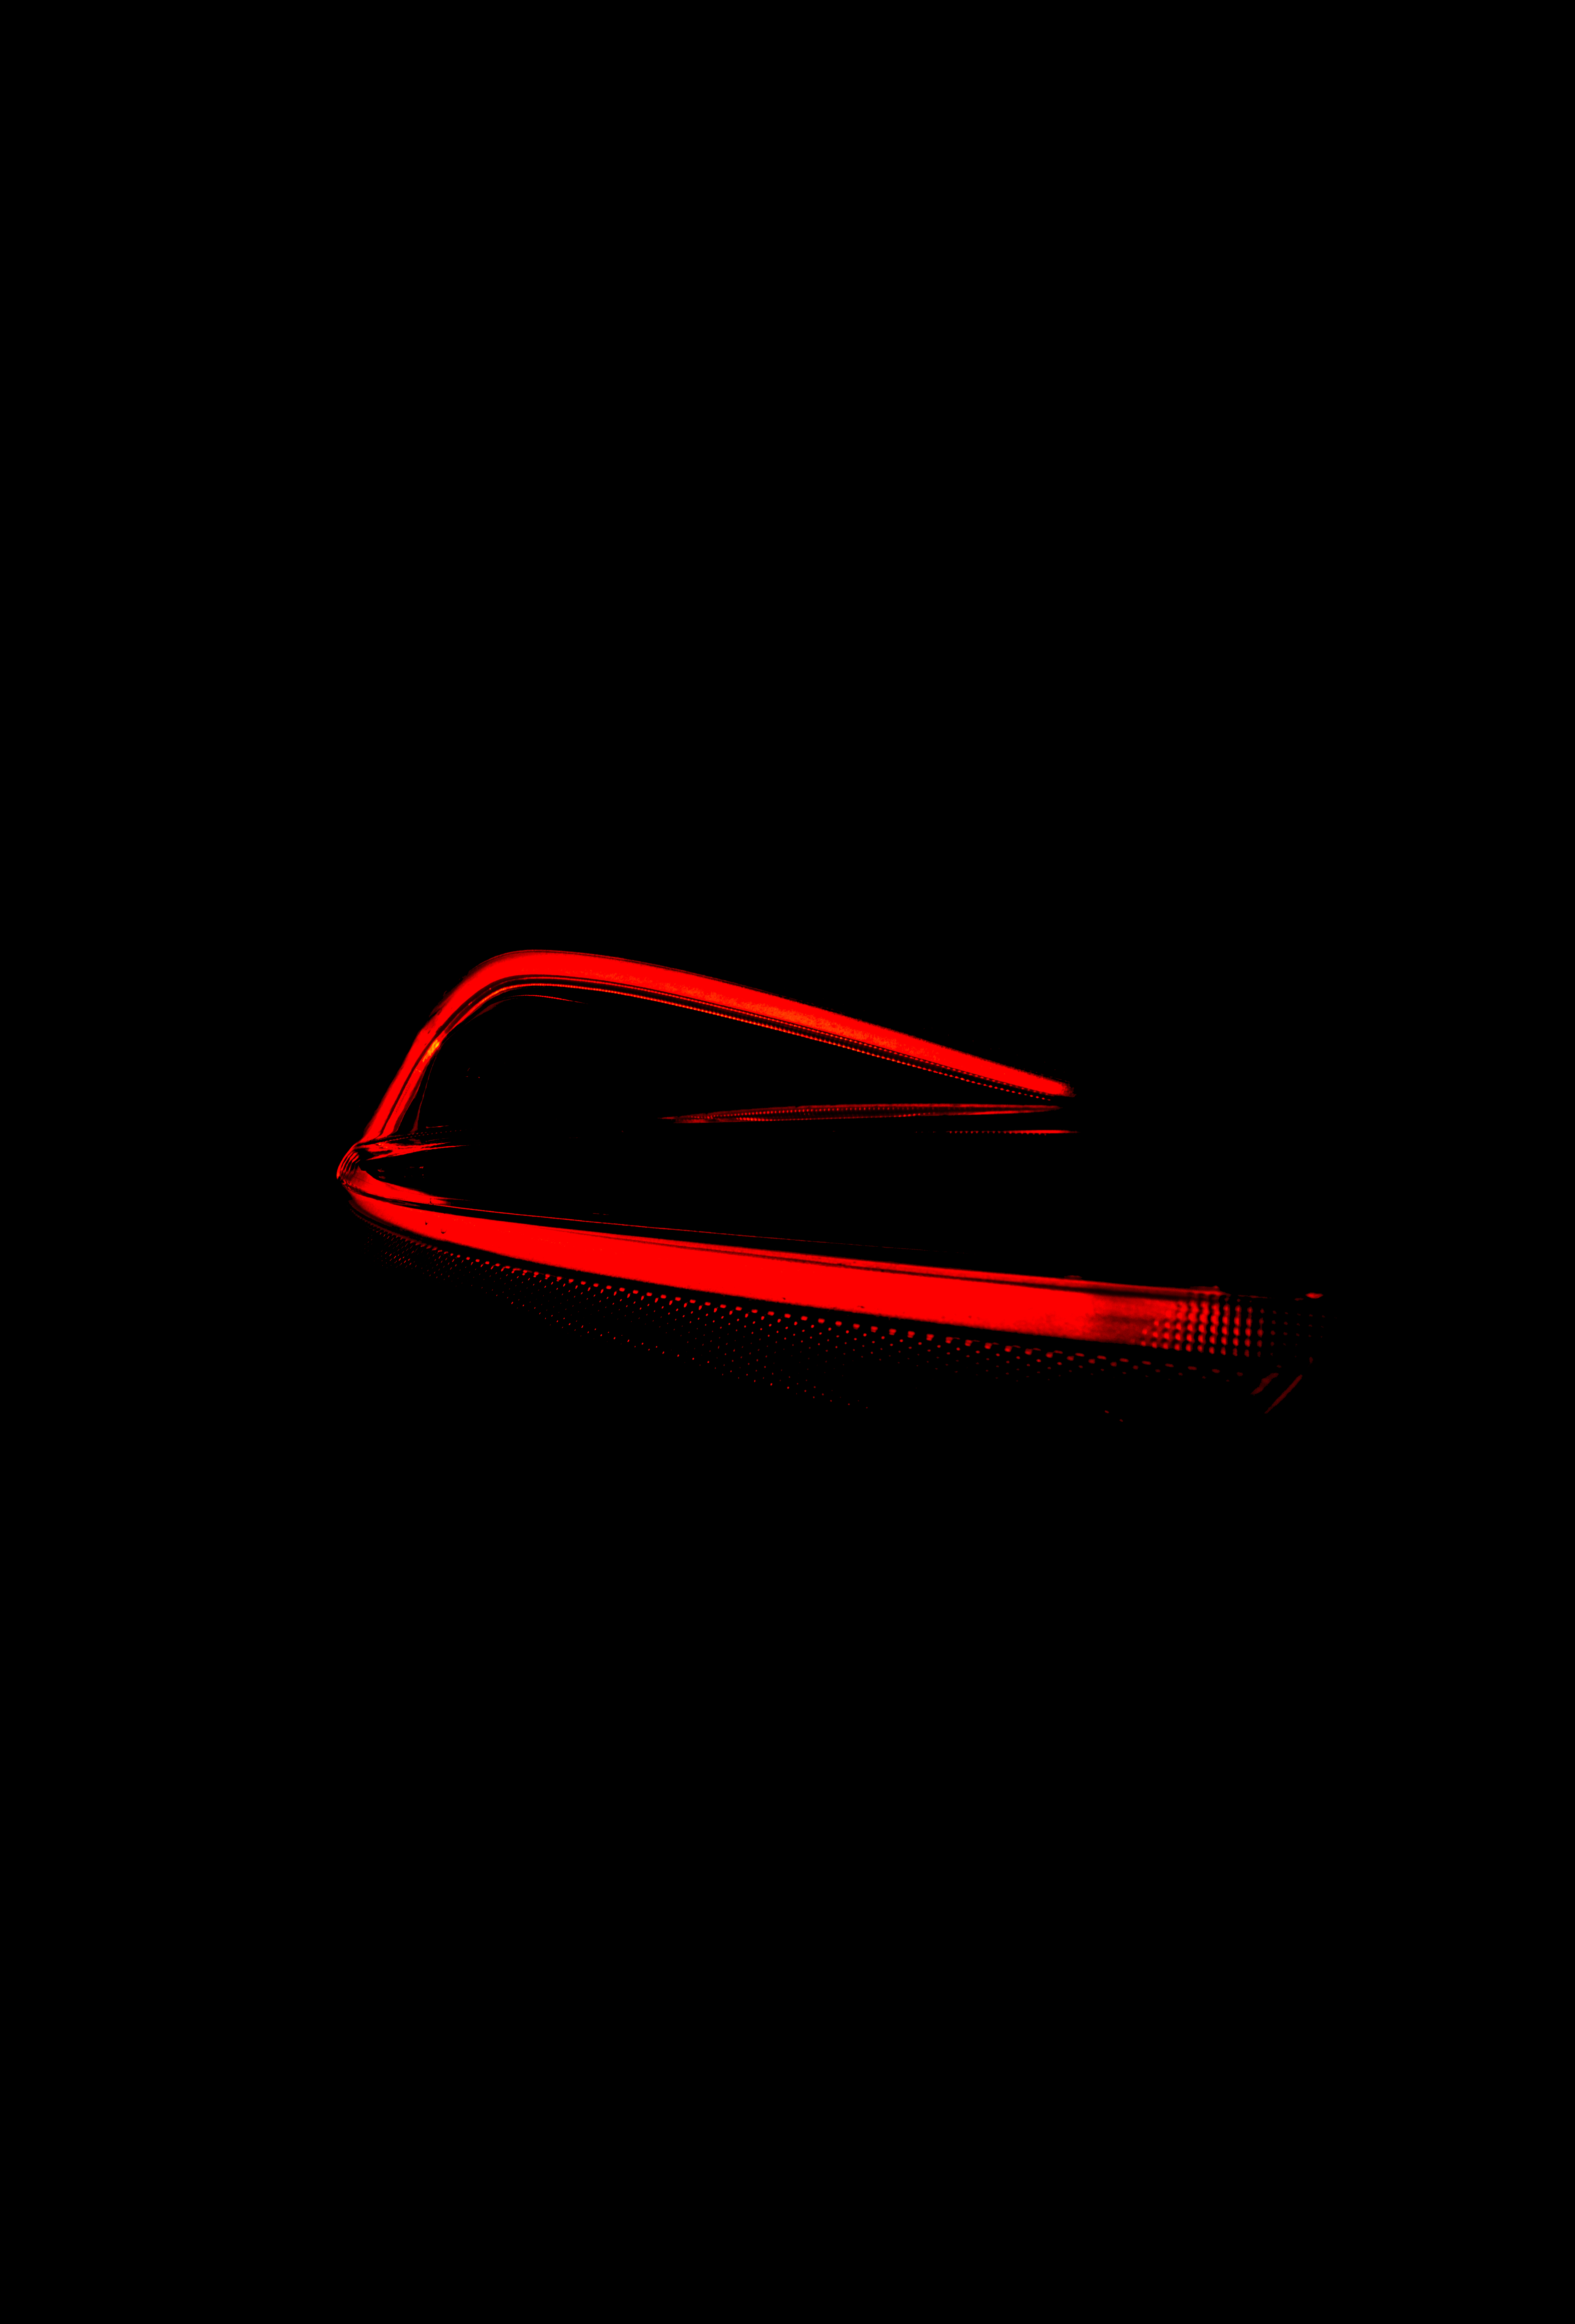 My Porsche GT3 OLED Wallpaper